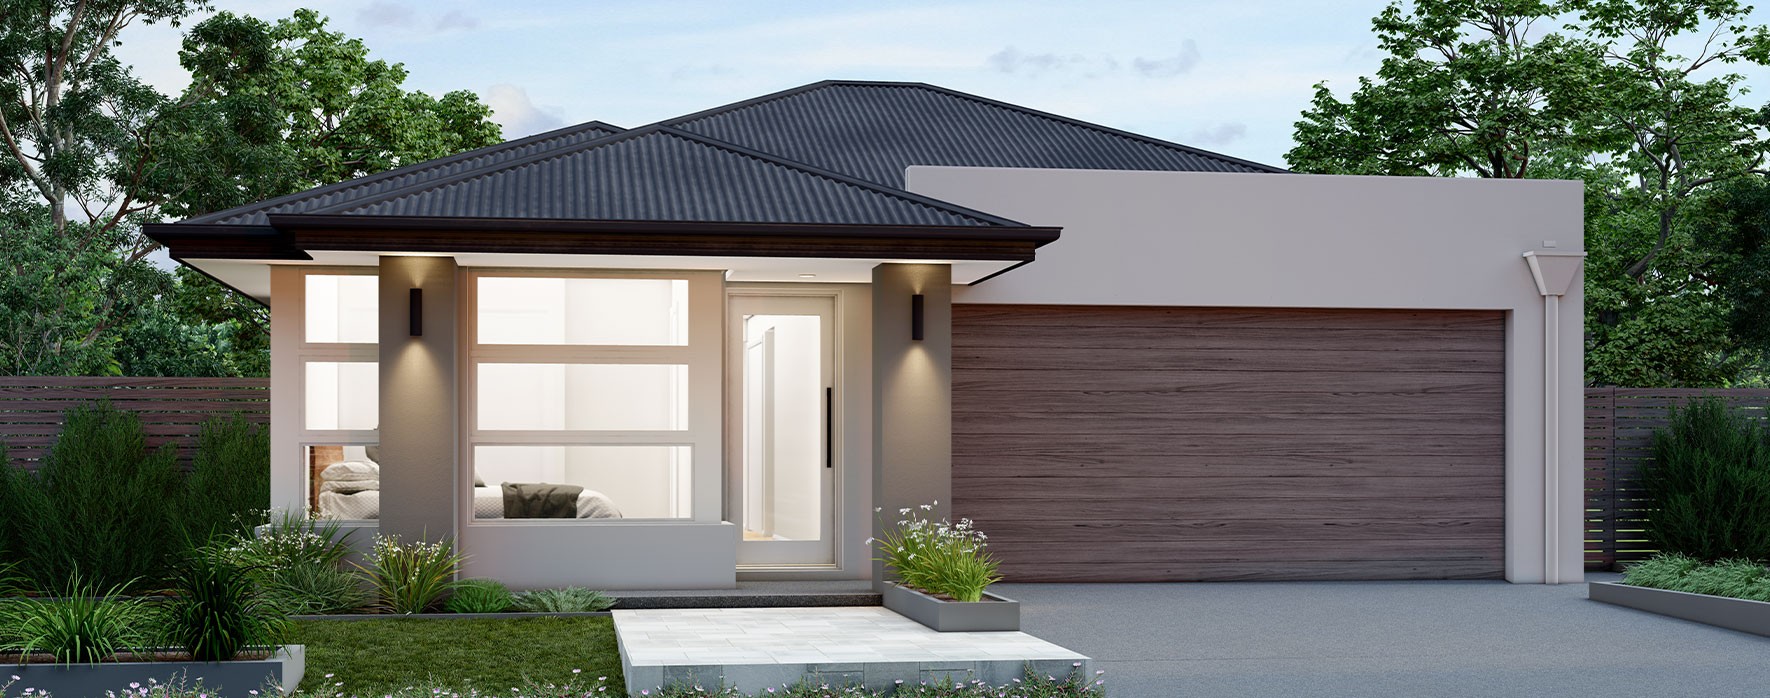 DG-canvas-RHS-single-storey-house-design